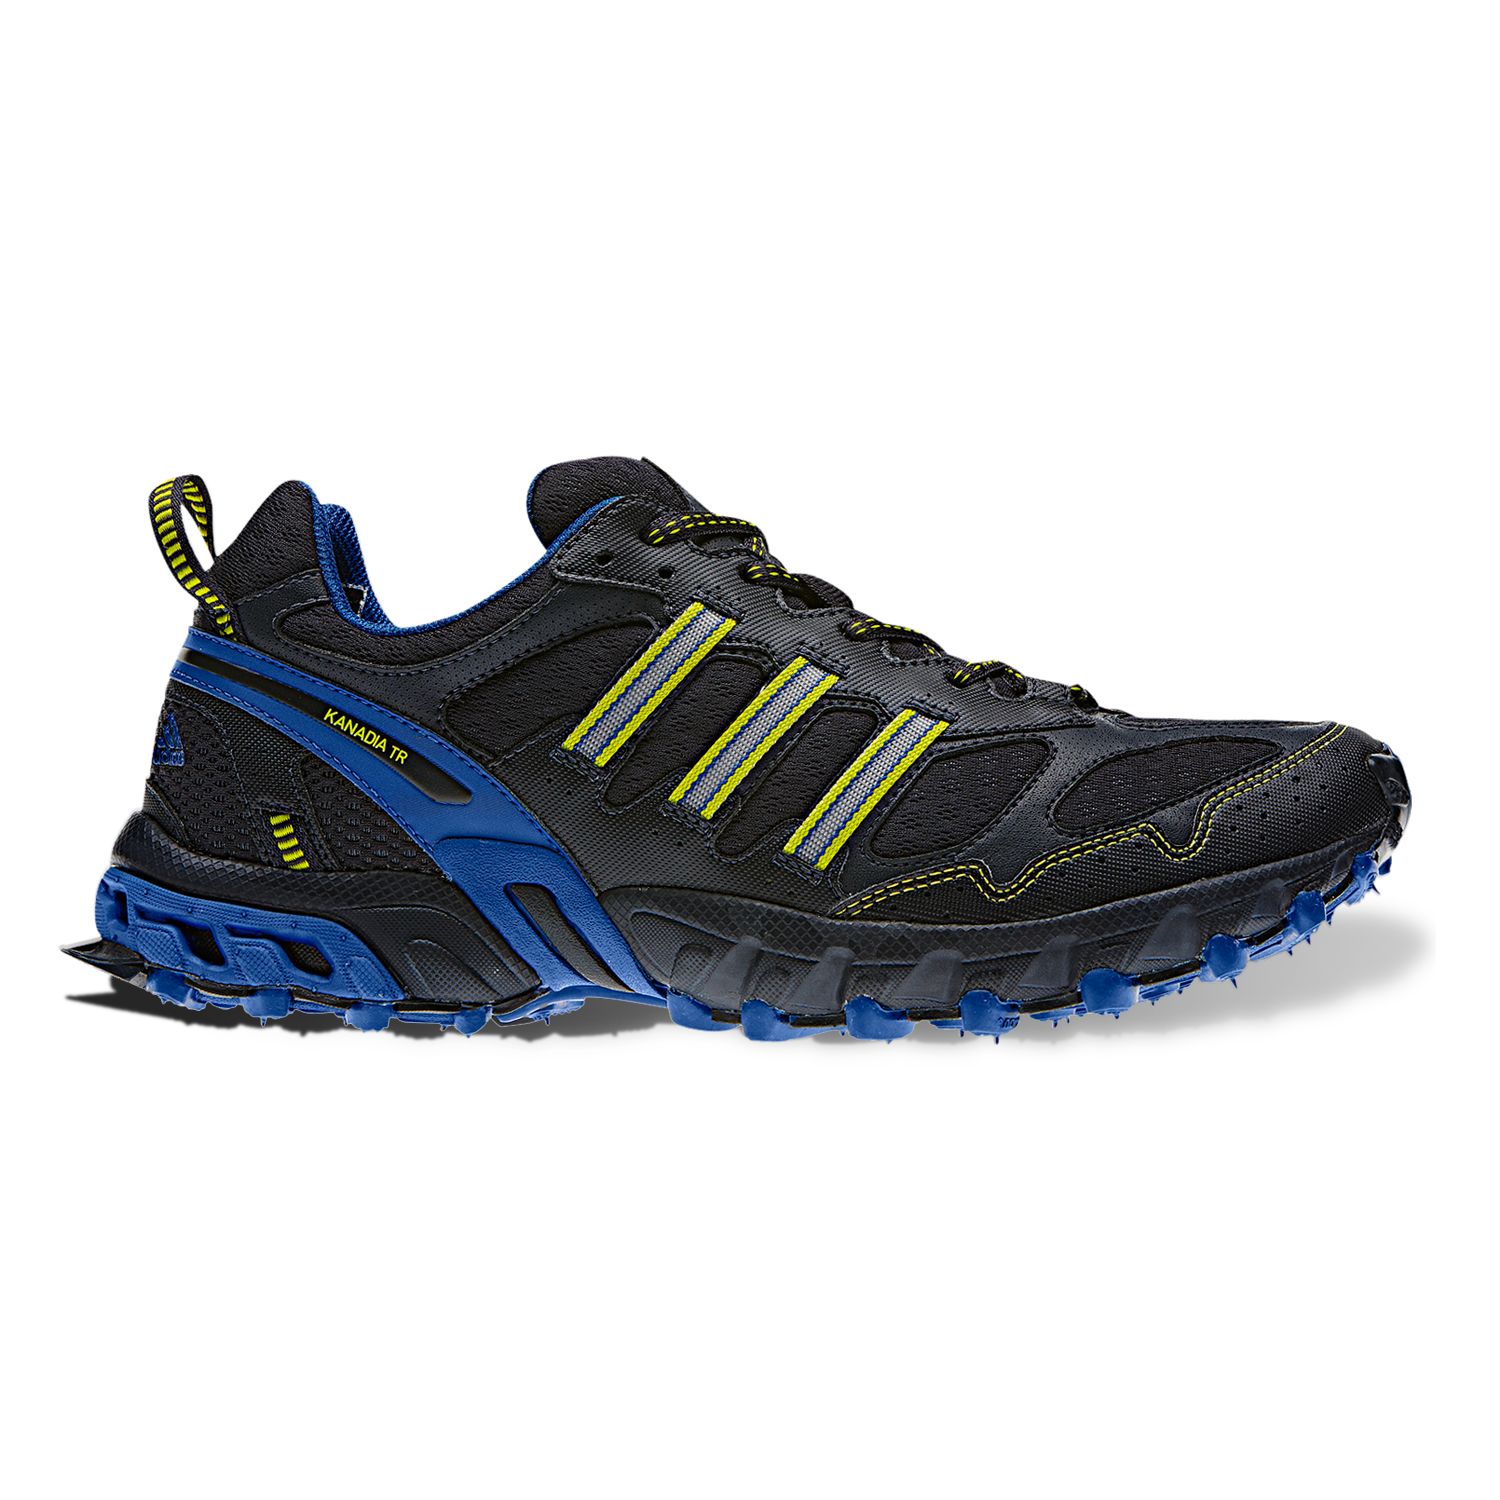 adidas kanadia mens trail running shoes